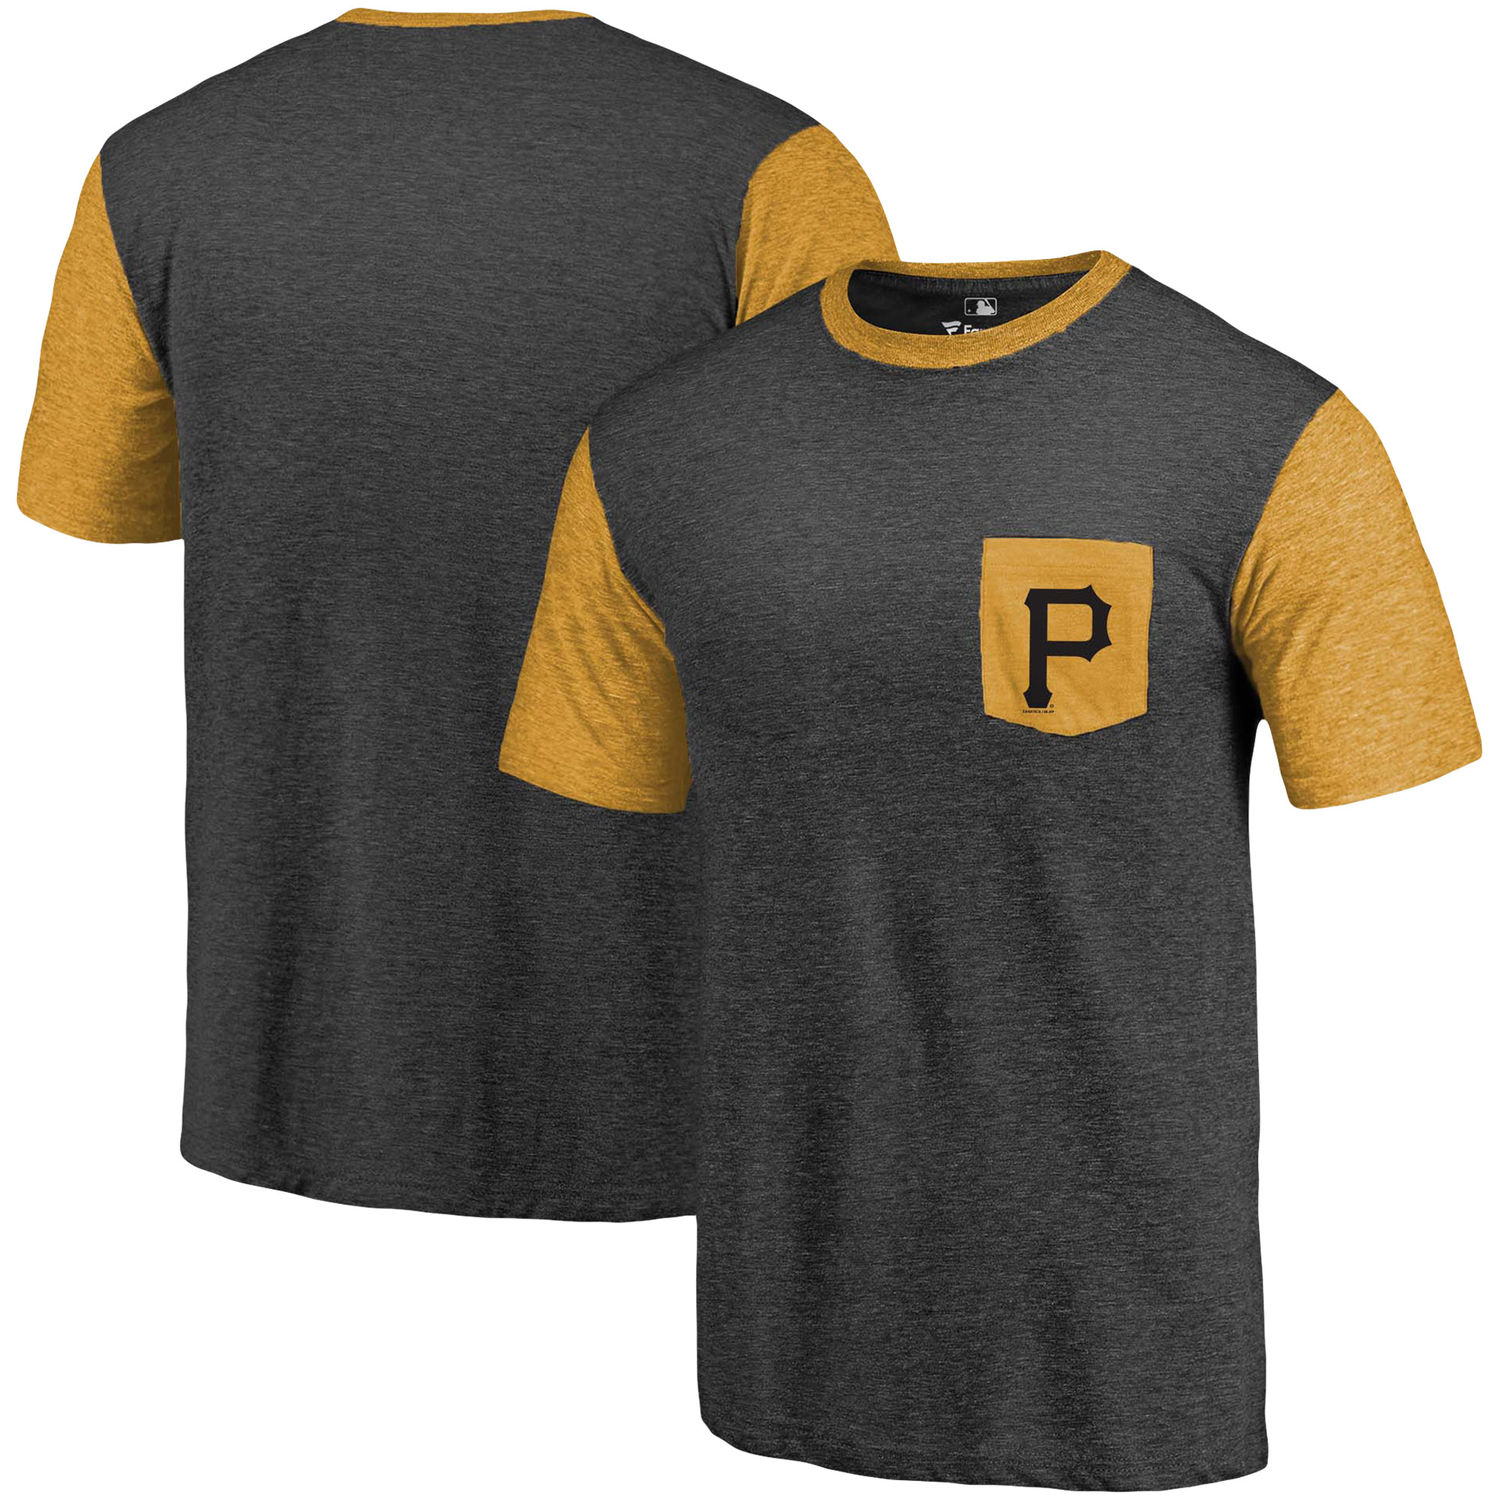 Men's Pittsburgh Pirates Fanatics Branded Black/Gold Refresh Pocket T-Shirt - Click Image to Close